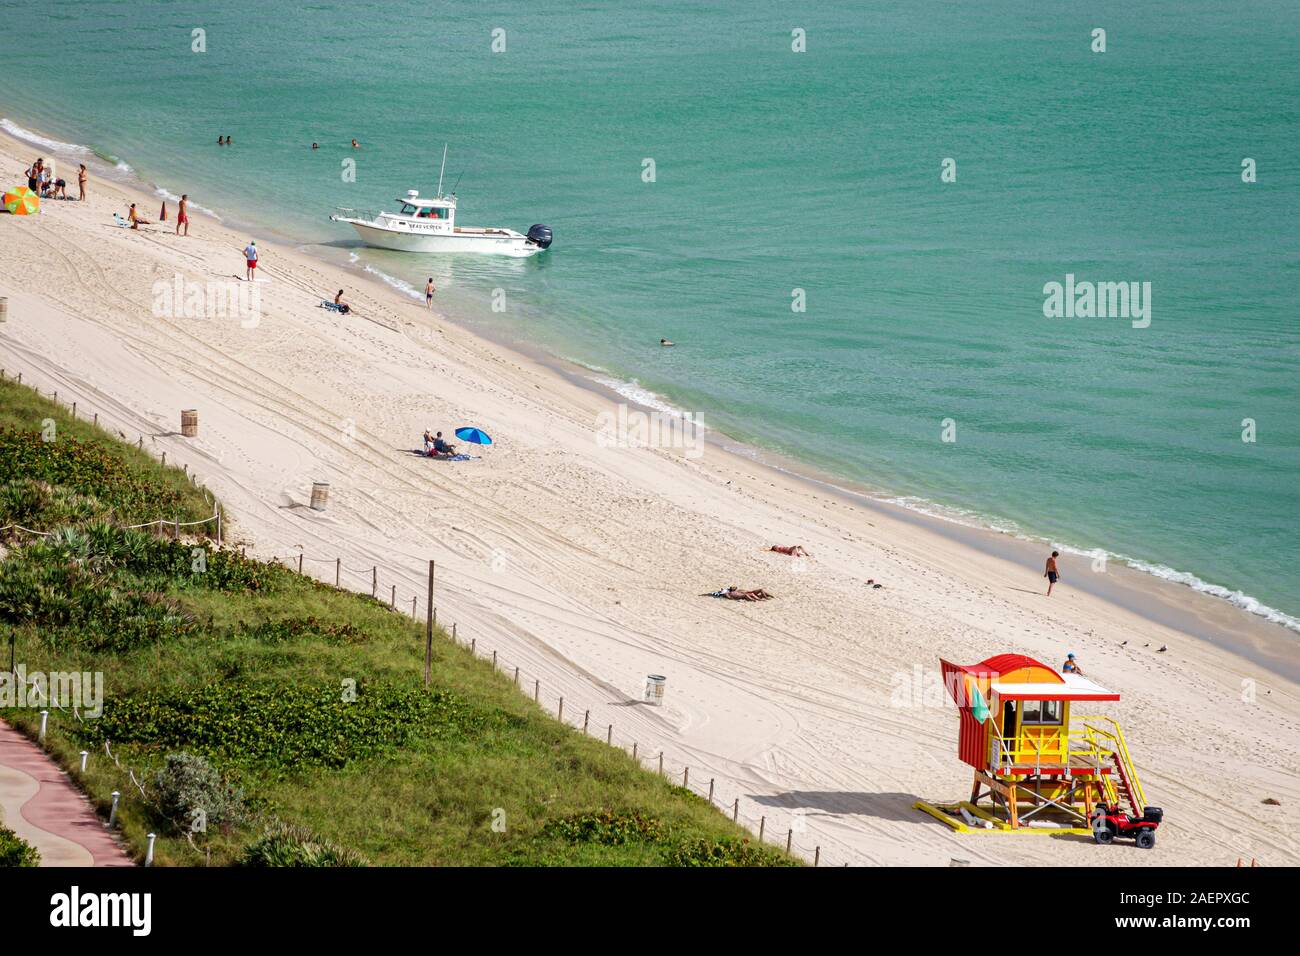 Miami Beach Florida,North Beach,shore,sand,water surf,lifeguard stand,dune,sunbathers,boat,hydrographic survey boat,coming ashore,public,Atlantic Ocea Stock Photo